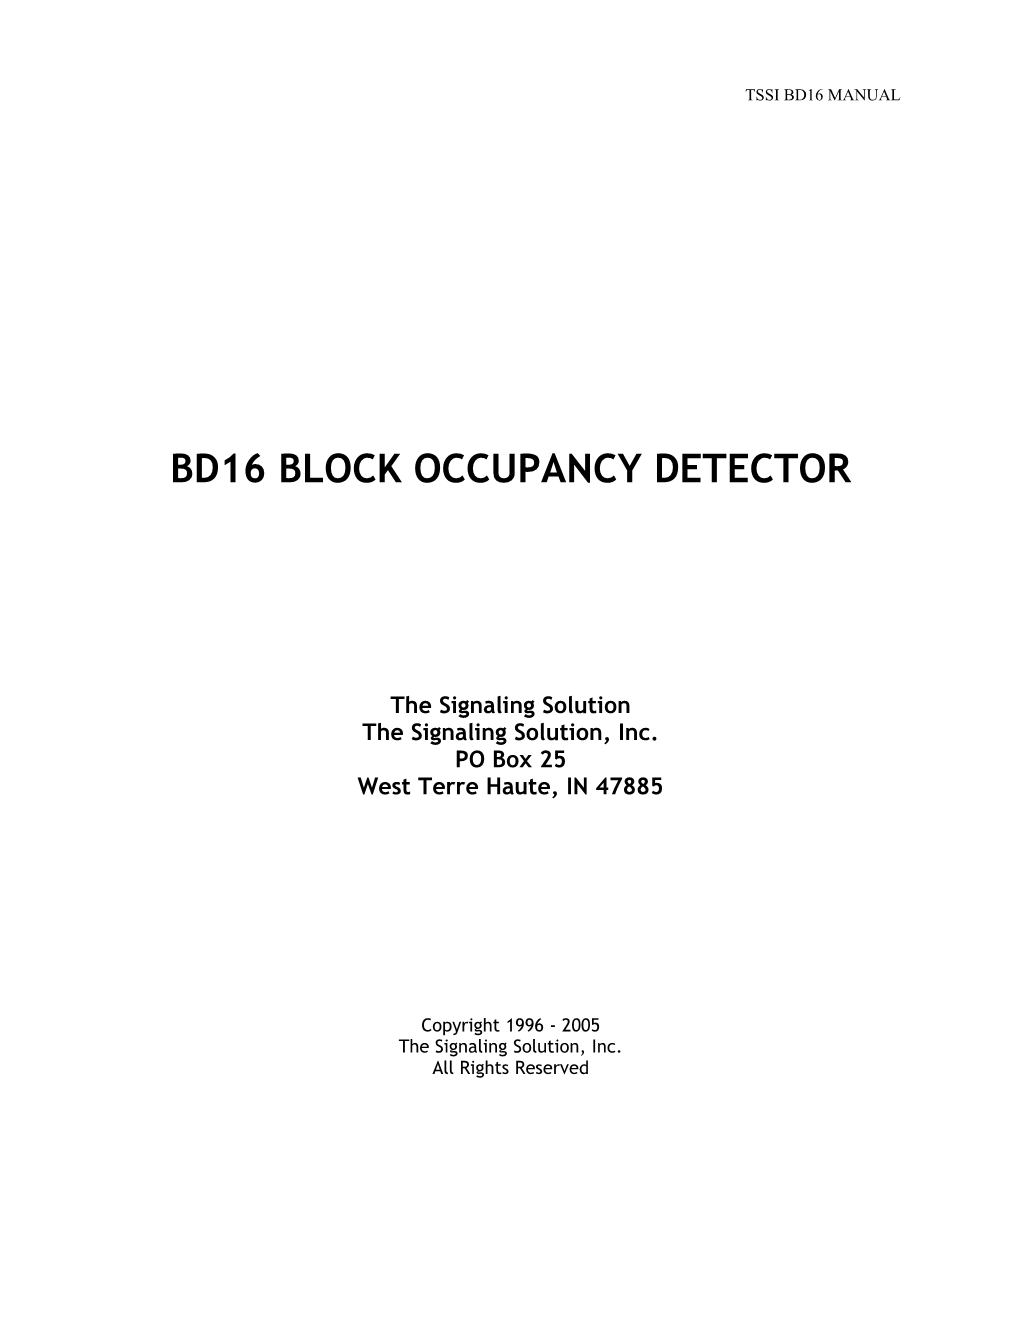 Bd16 Block Occupancy Detector